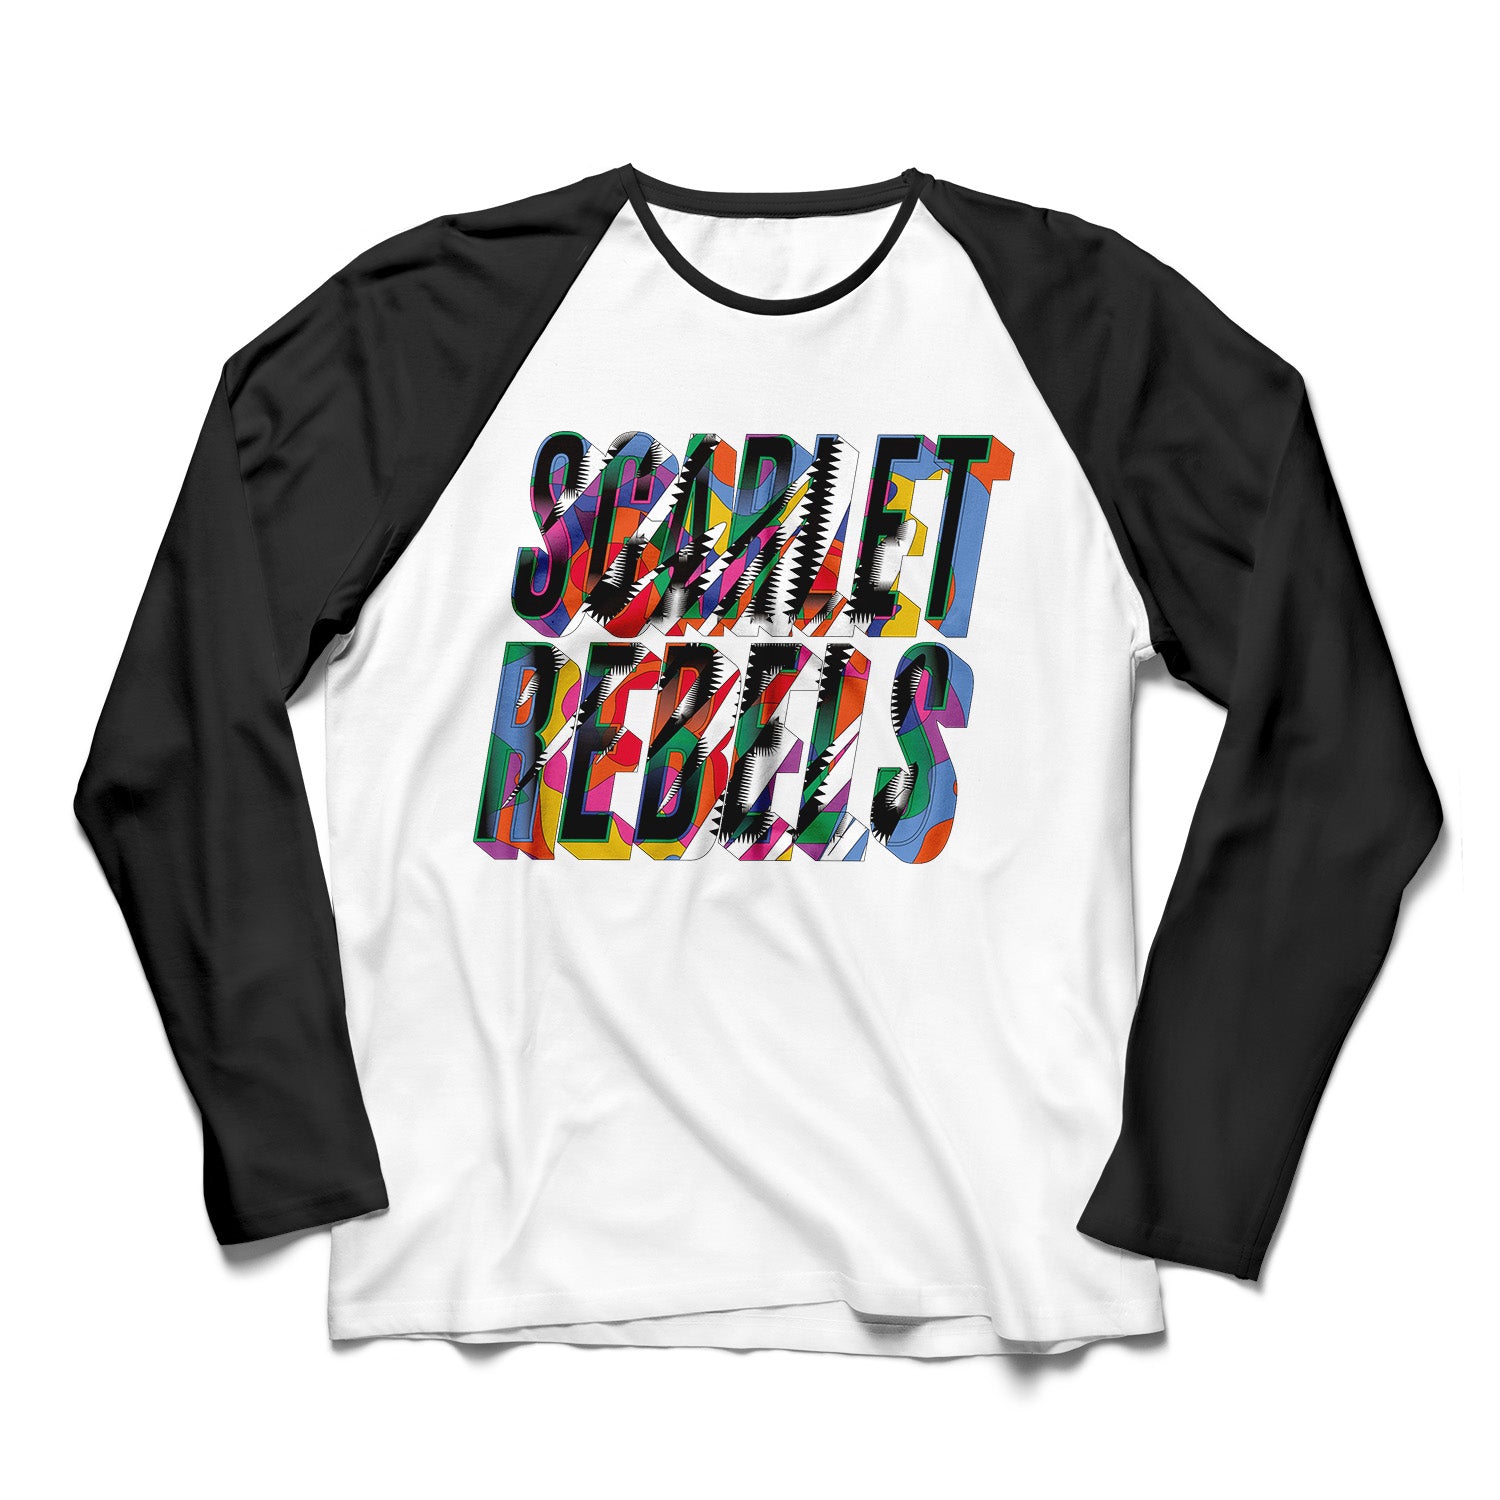 Scarlet Rebels "Where The Colours Meet" Long Sleeve Raglan T shirt - PRE-ORDER